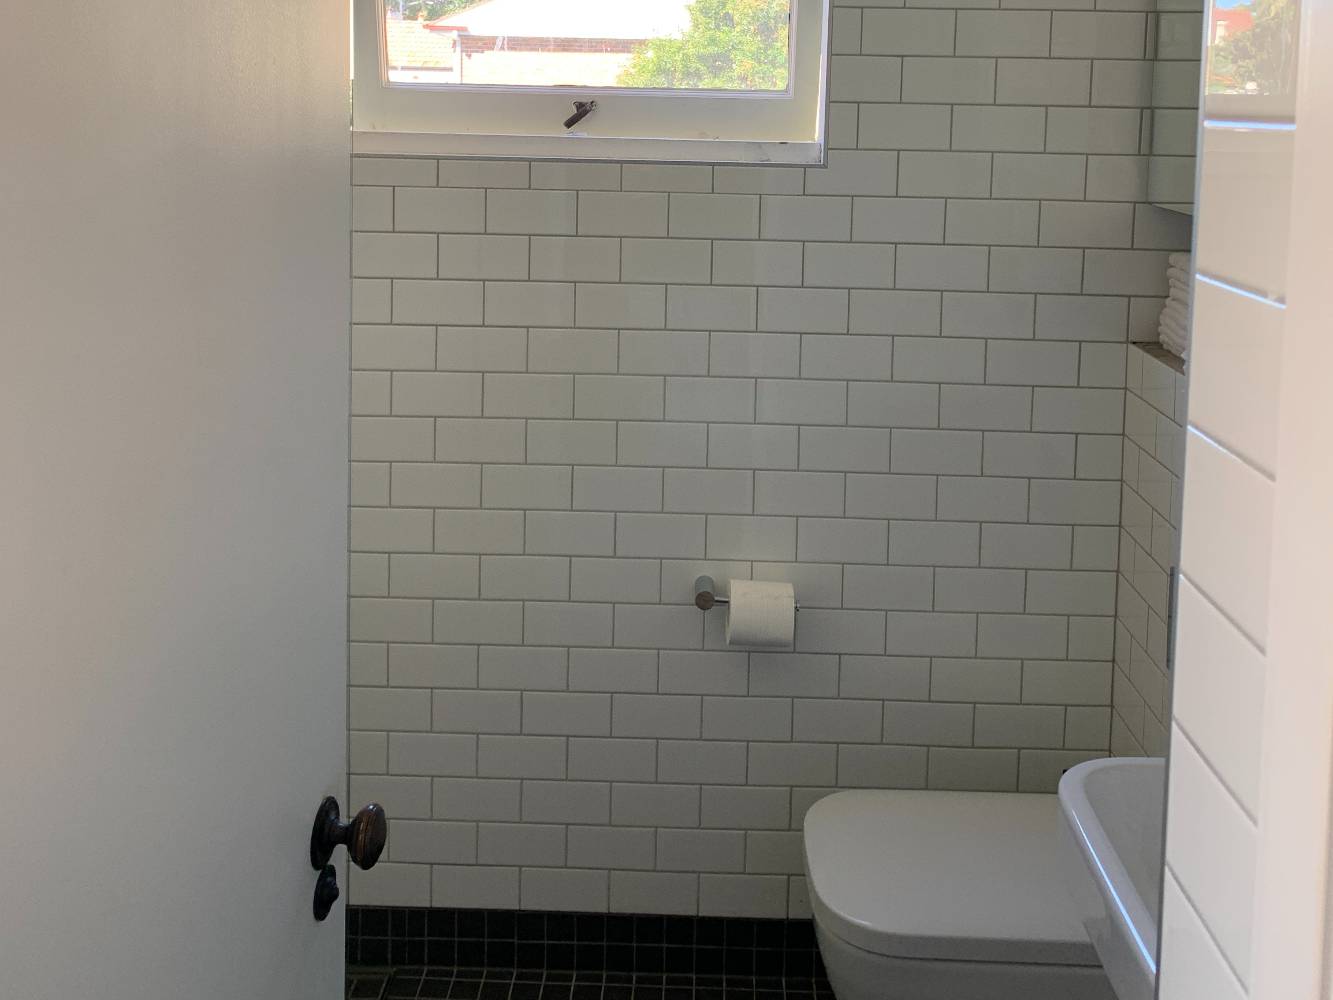 Flat 2 bathroom toilet